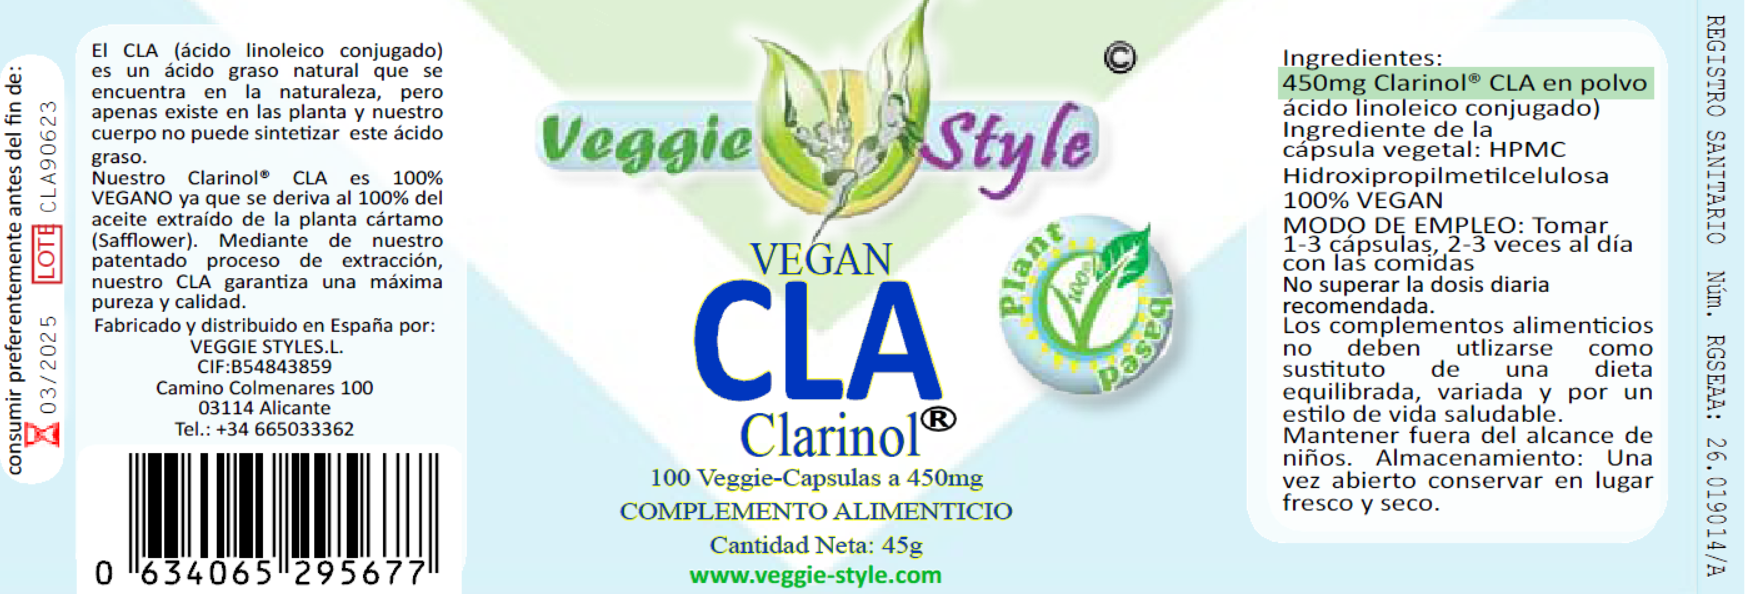 Veggie-Style-vegan-CLA-clarinol